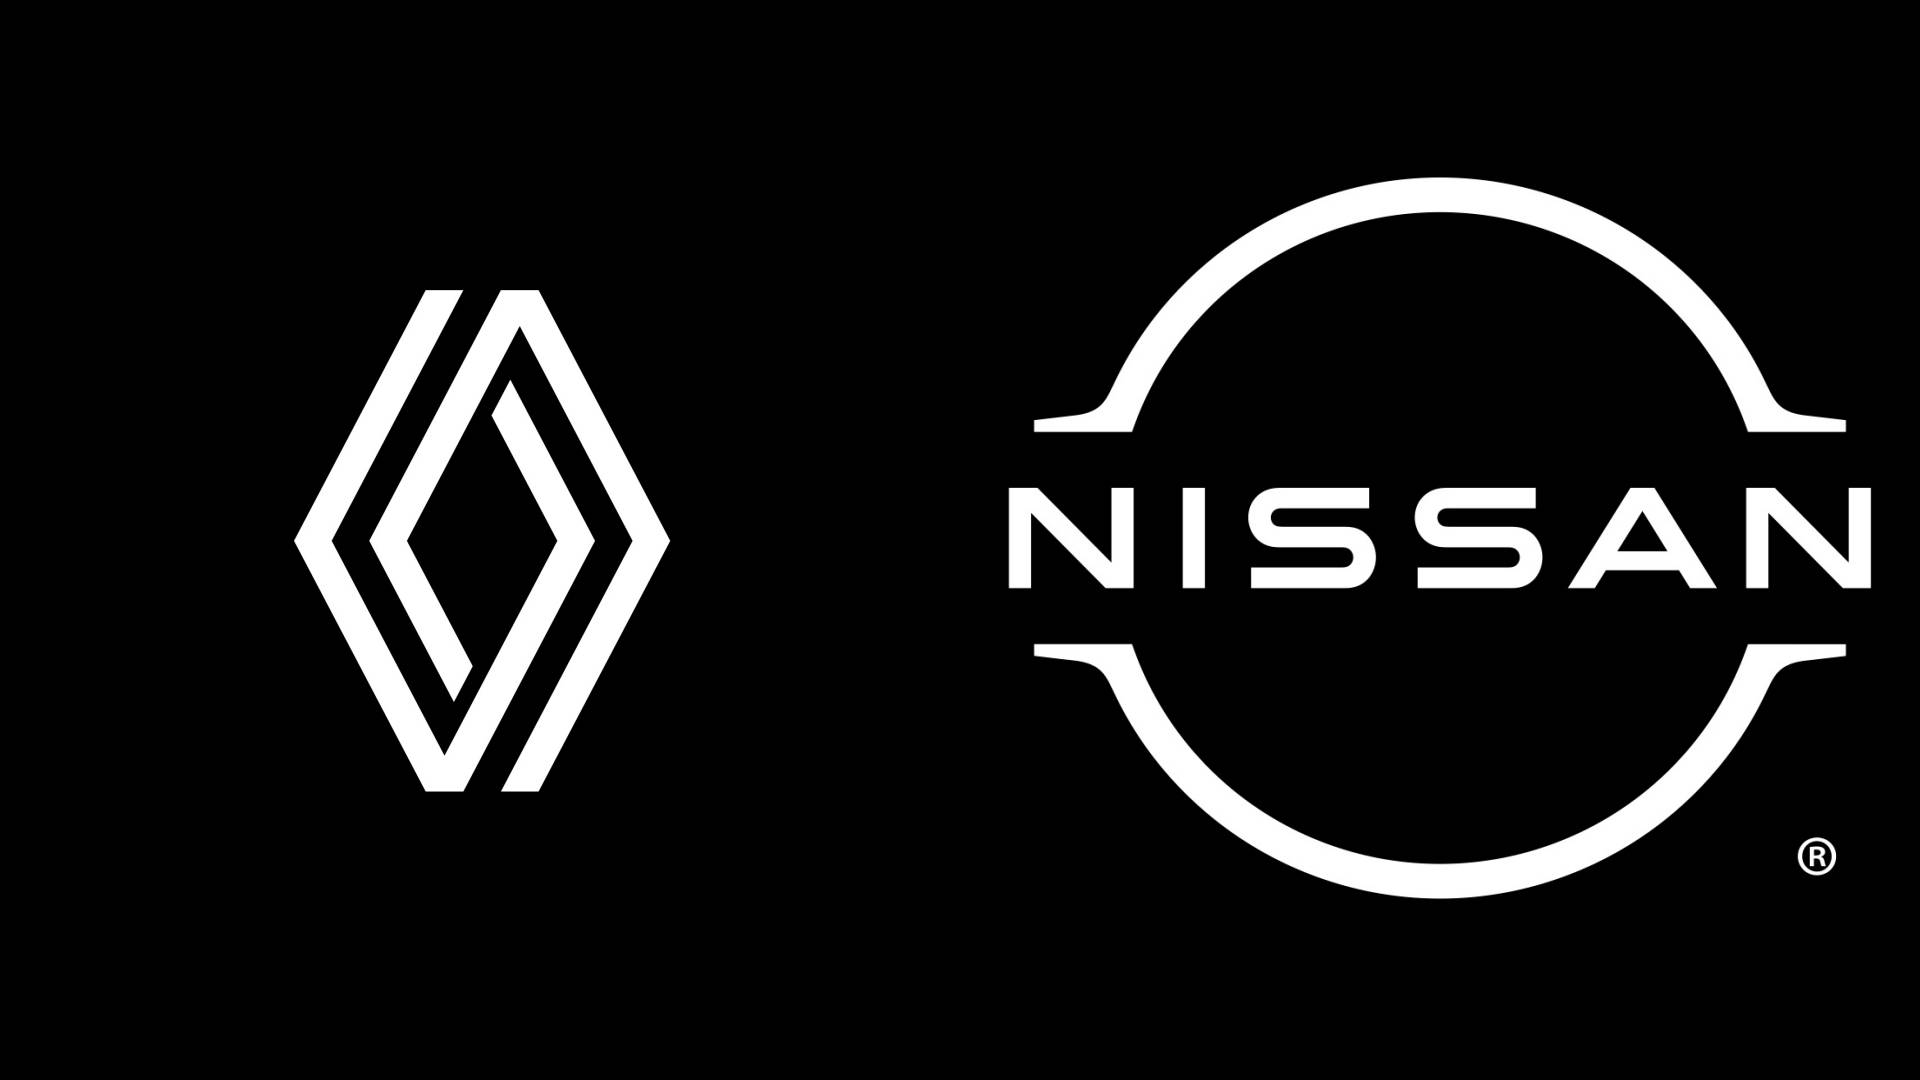 nissan and renault logo